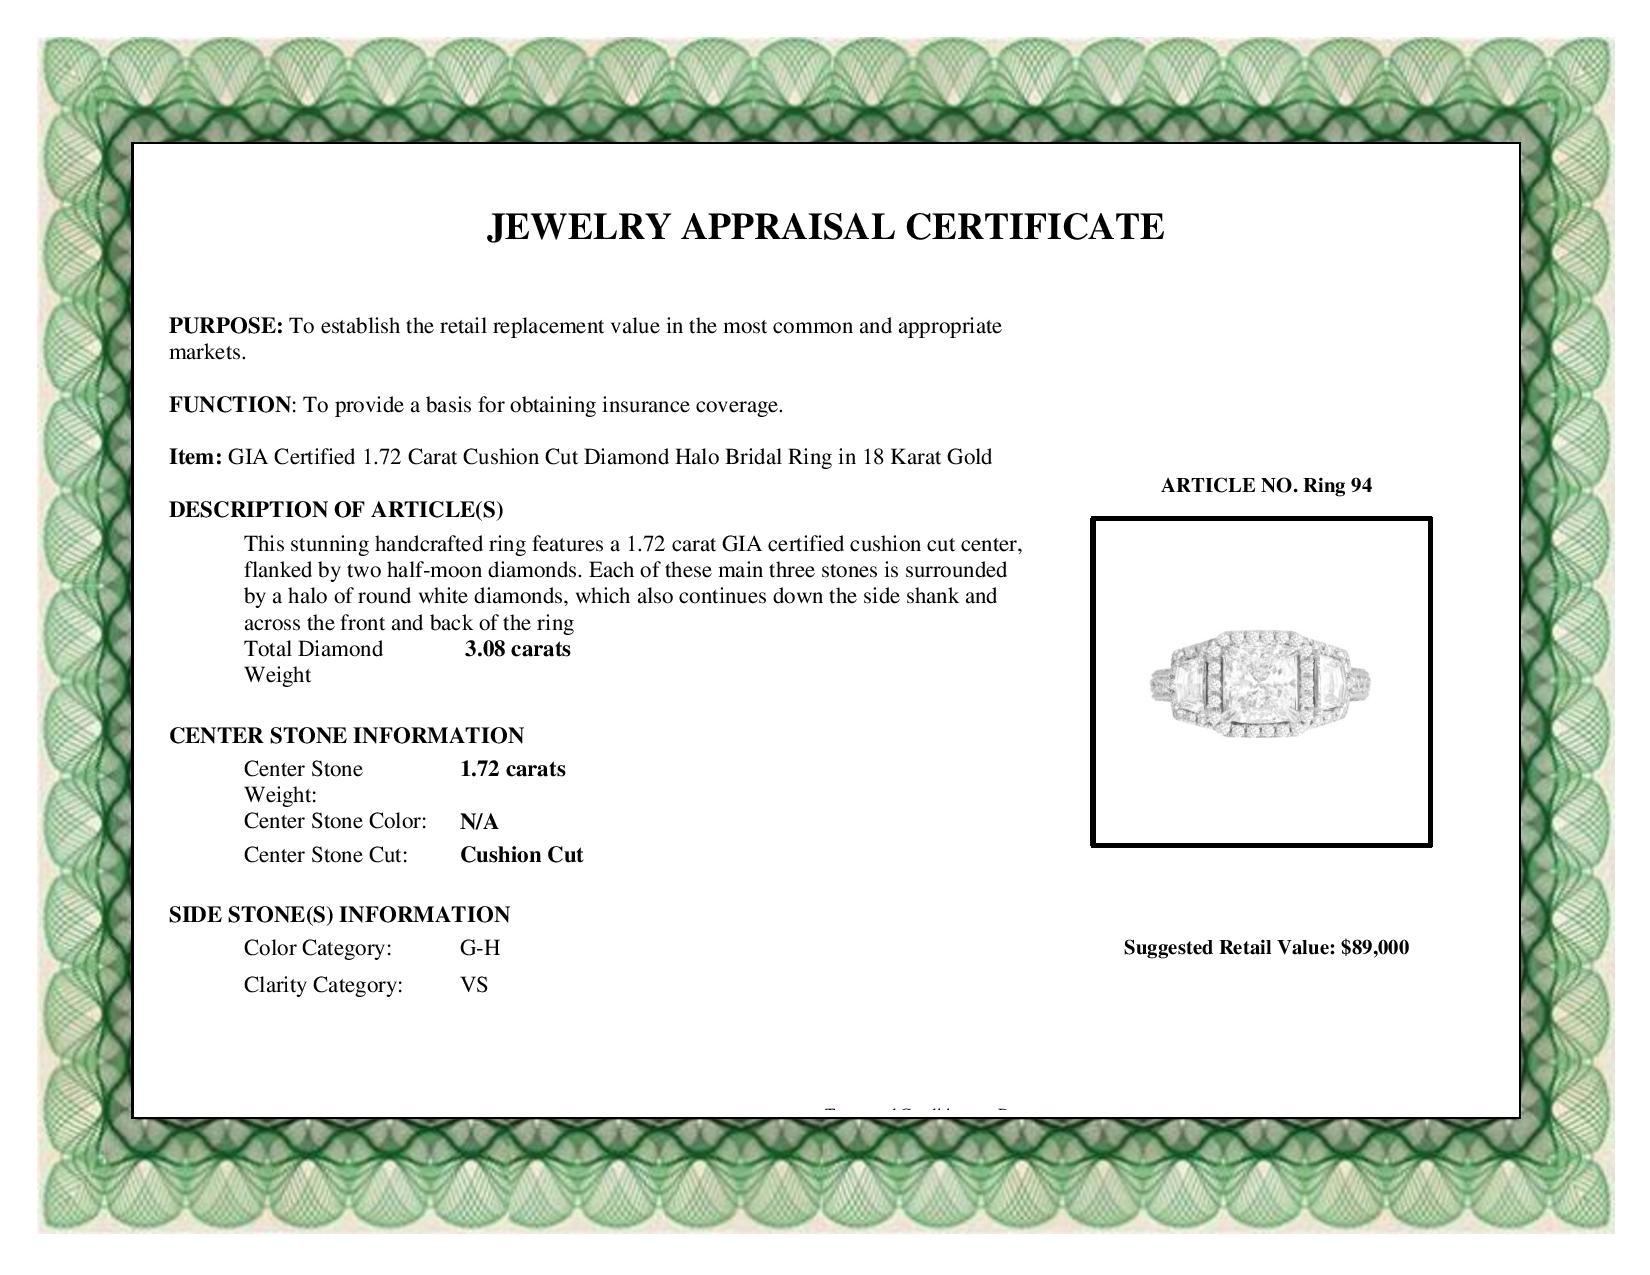 GIA Certified 1.72 Carat Cushion Cut Natural Diamond Ring in 18 Karat Gold ref94 For Sale 2